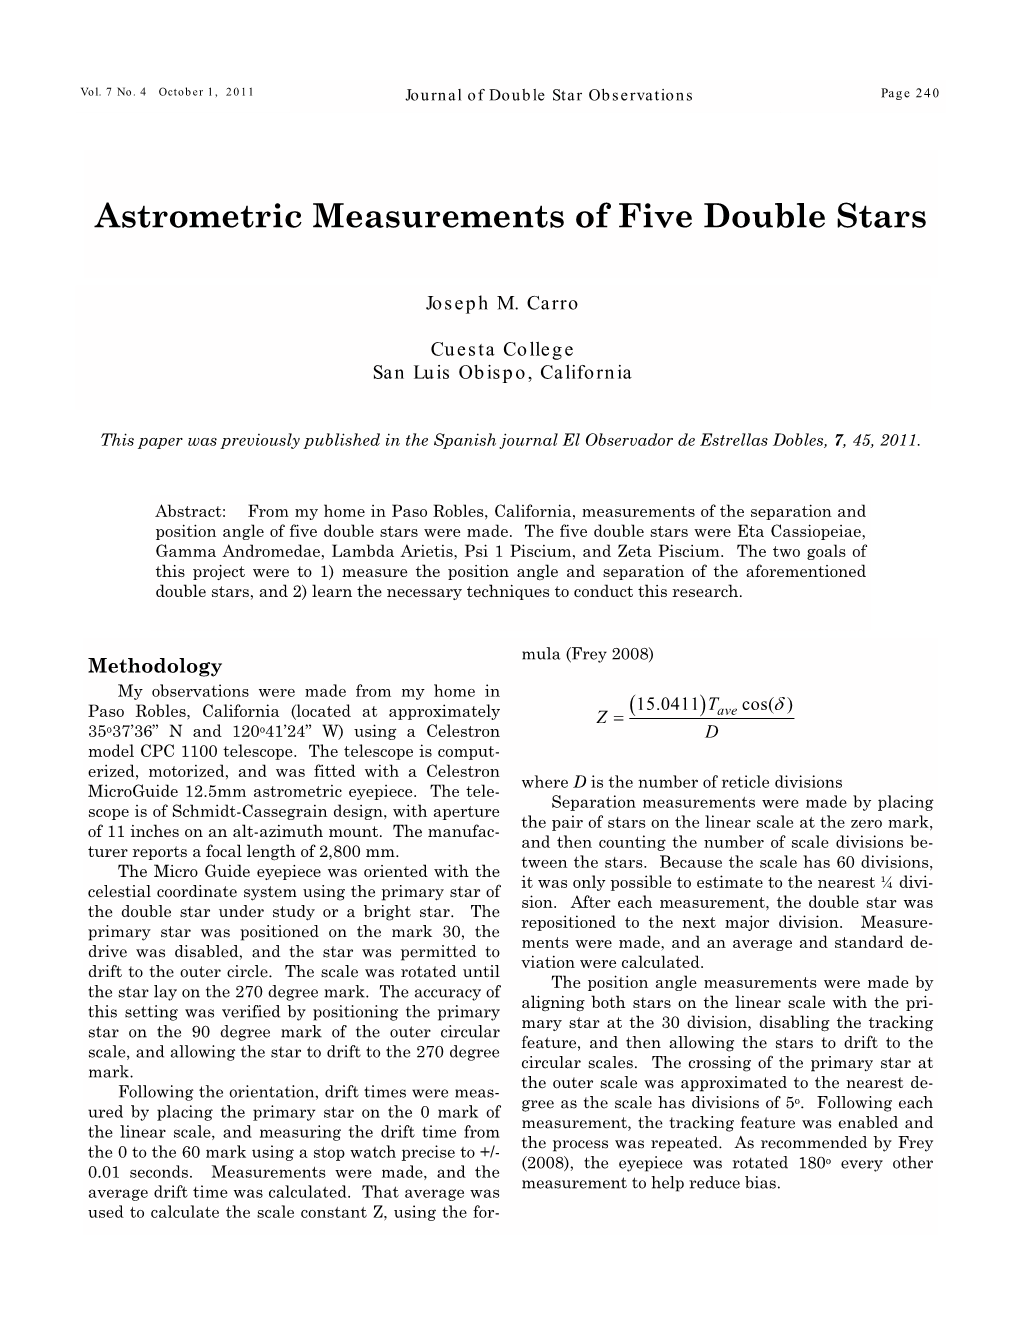 Astrometric Measurements of Five Double Stars